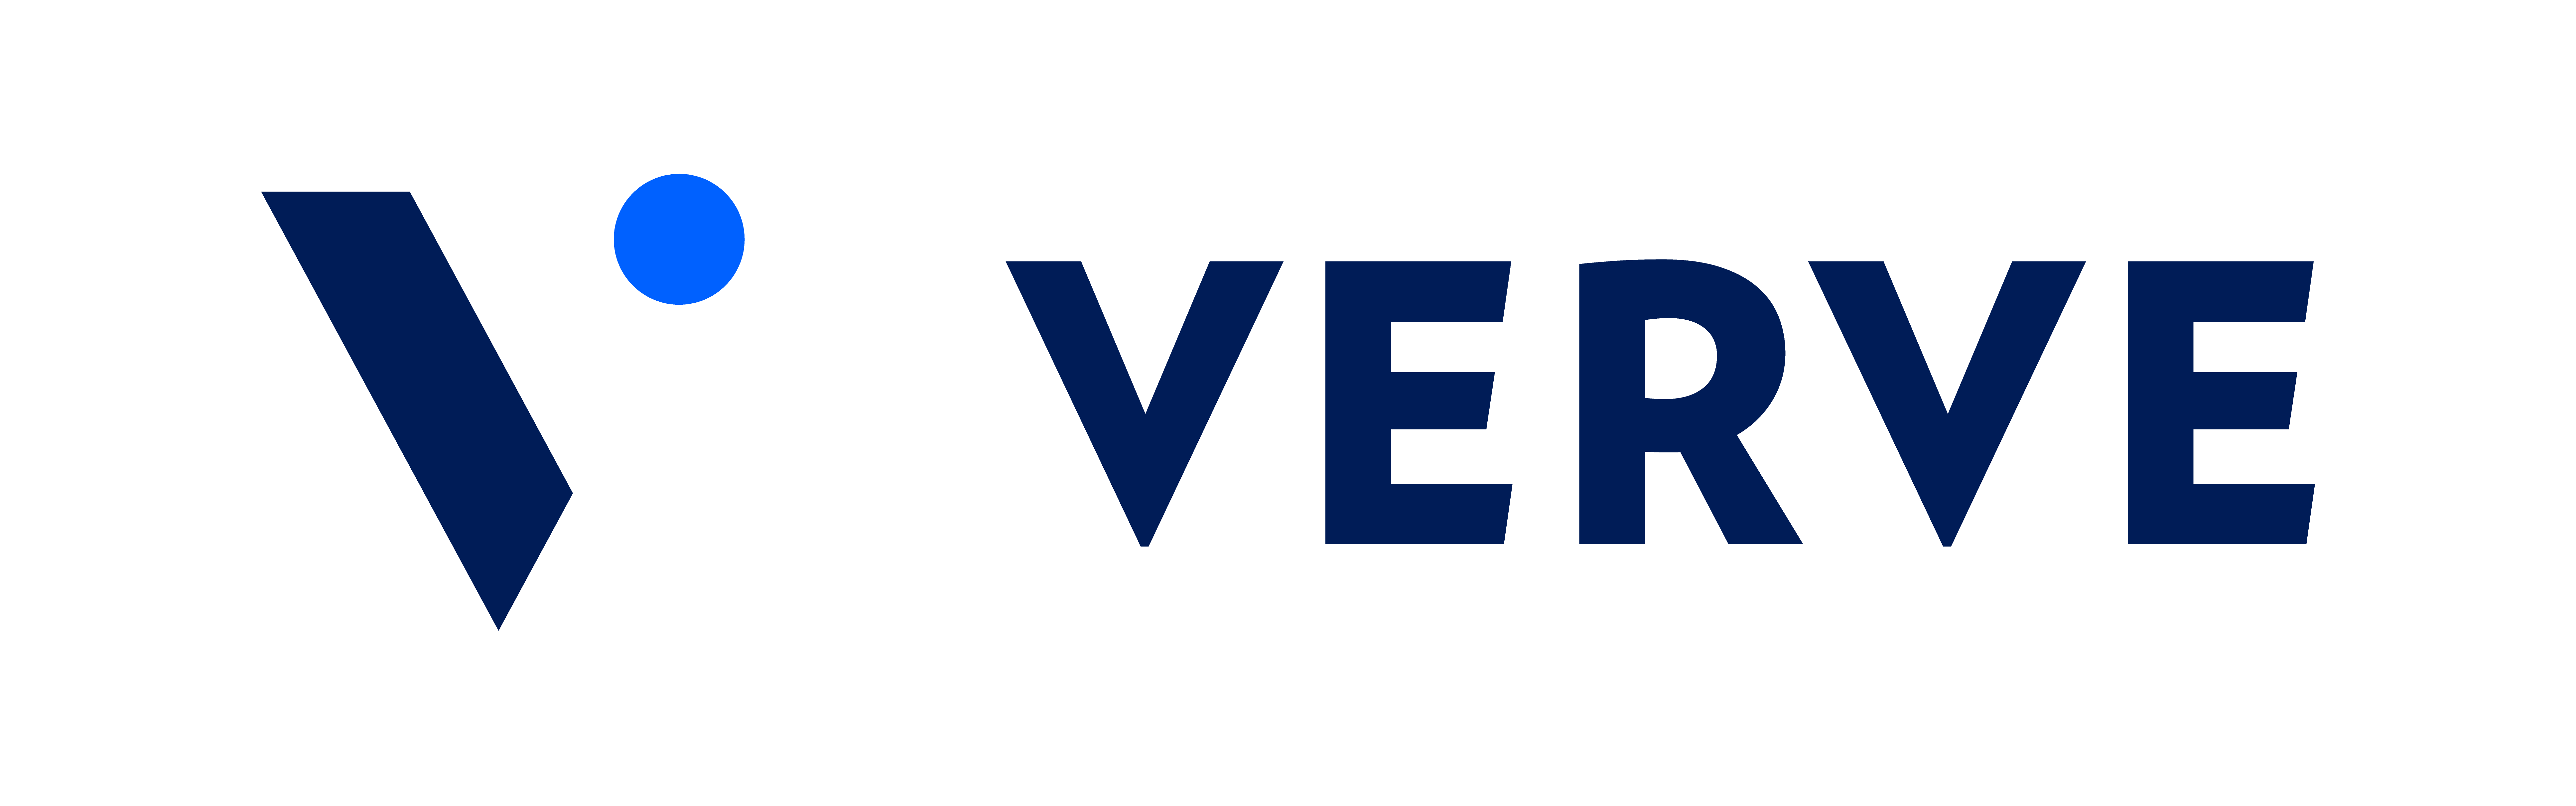 Verve Logo - Verve | The Dominant Platform for Programmatic Mobile Display and Video